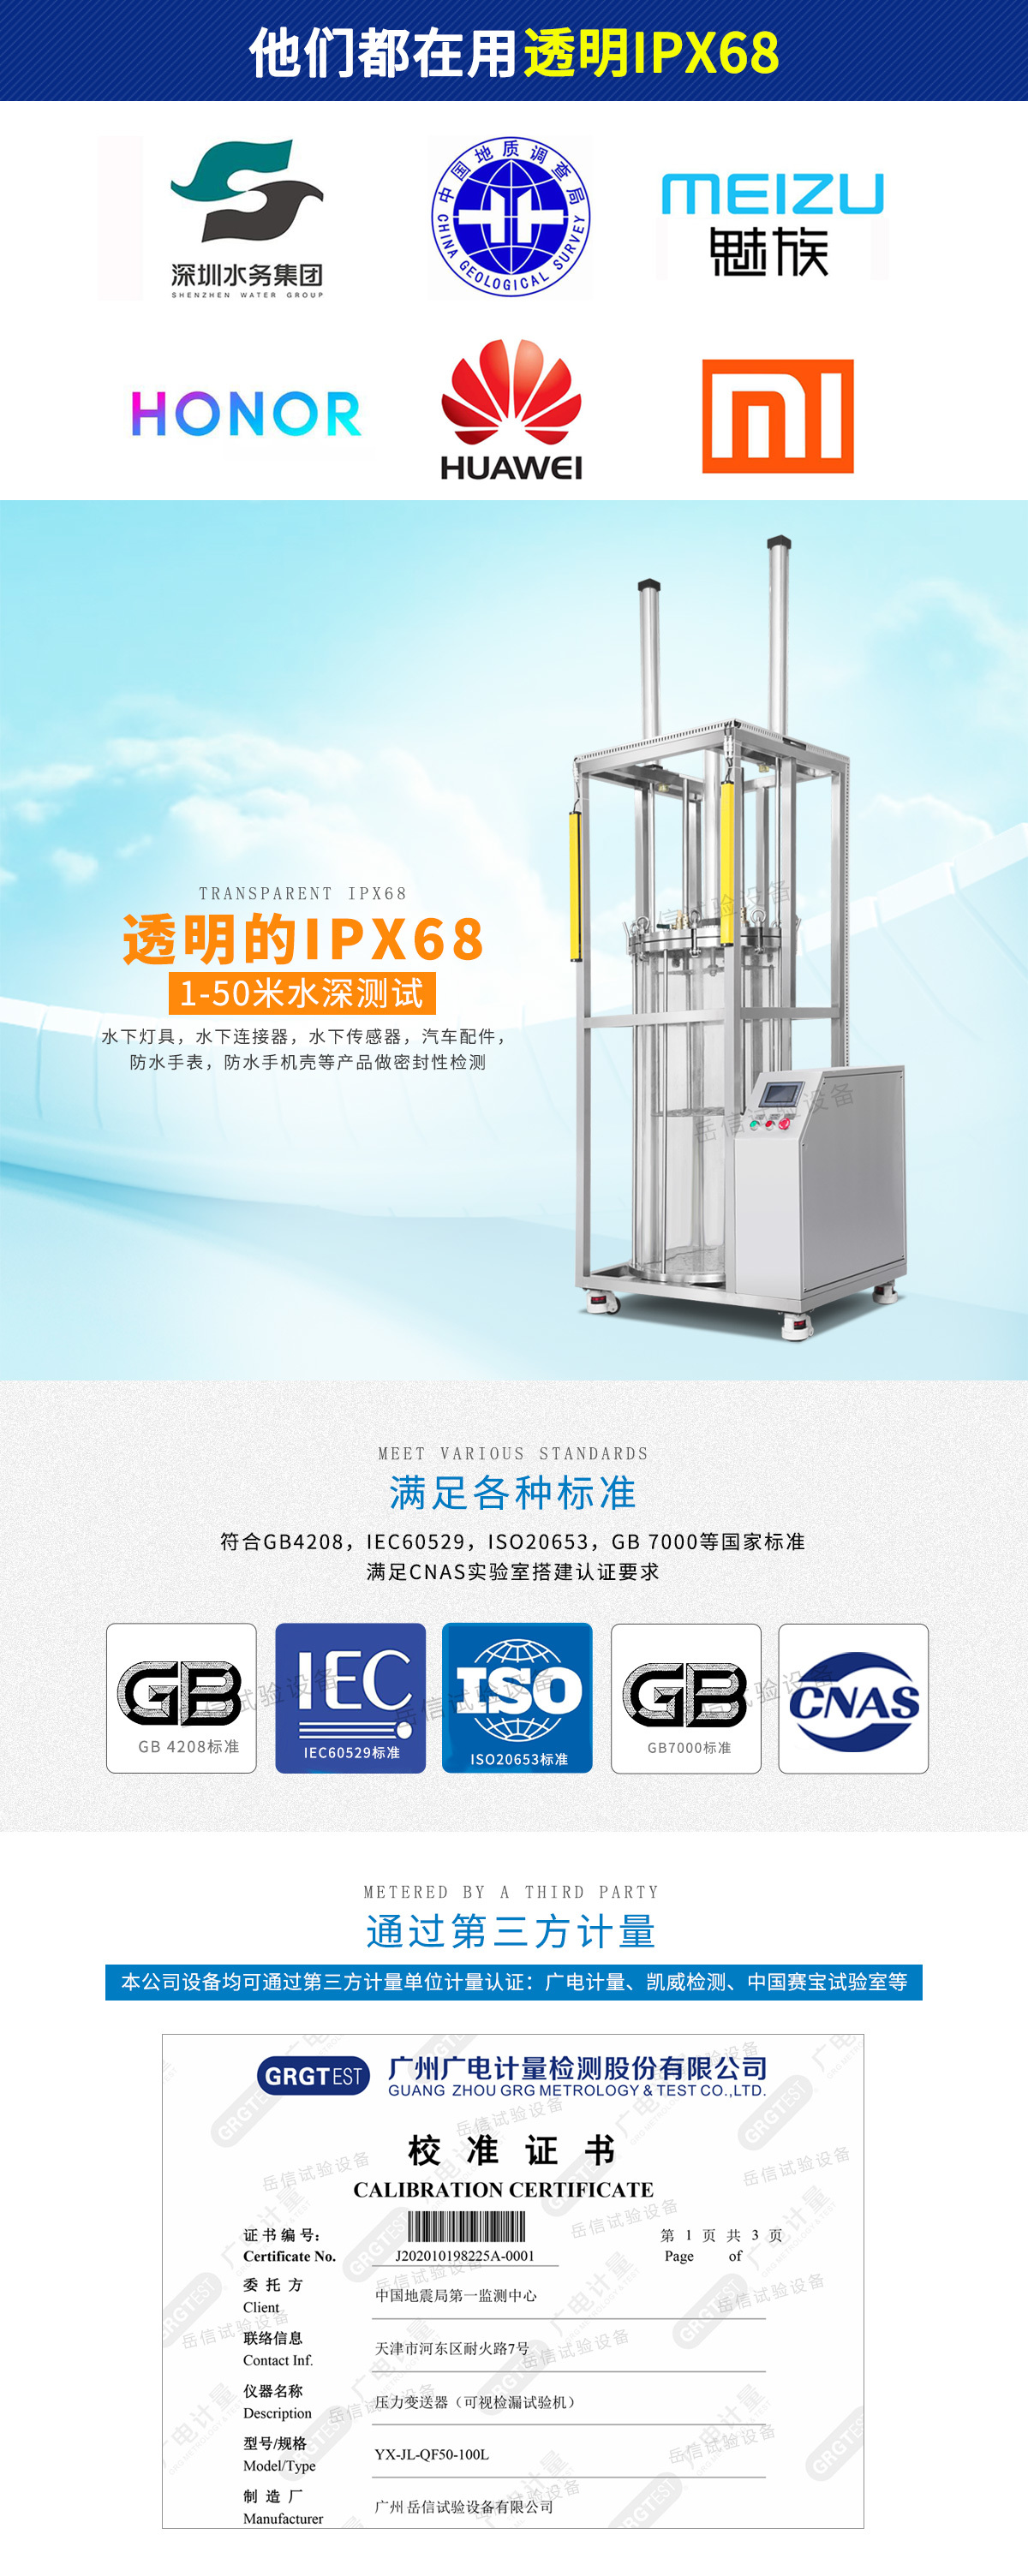 IPX8 negative pressure testing machine